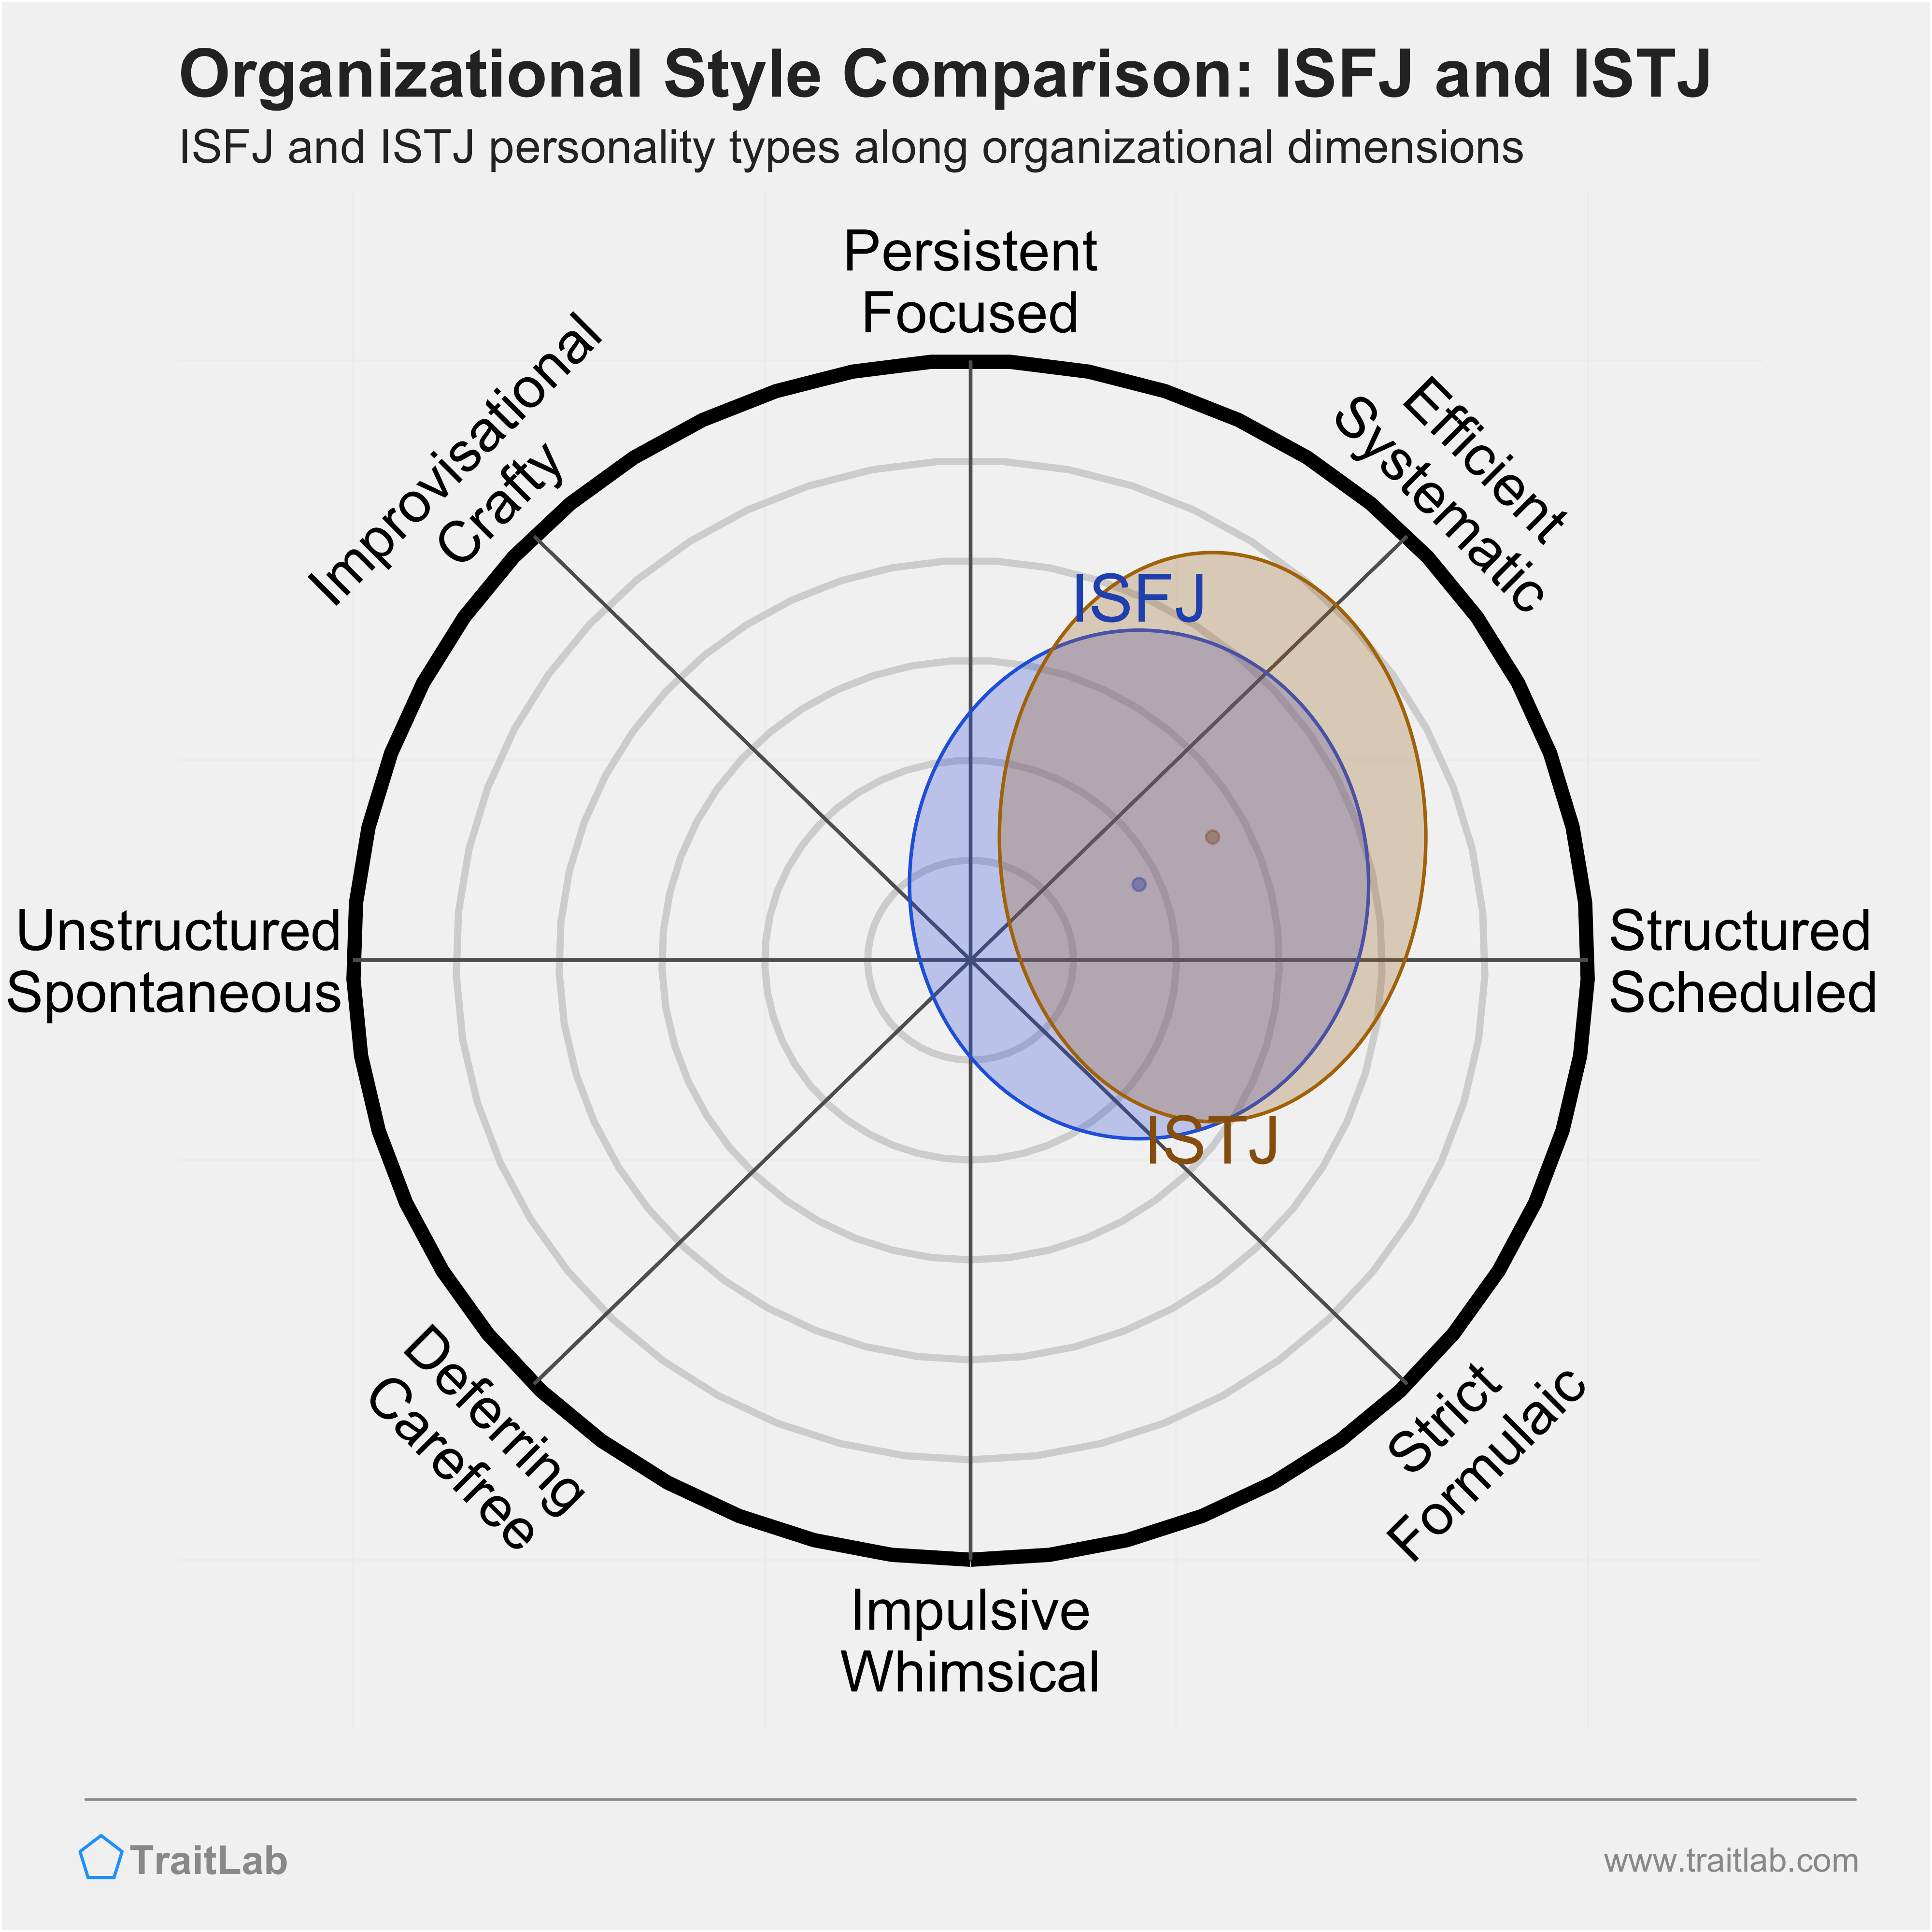 ISFJ and ISTJ comparison across organizational dimensions